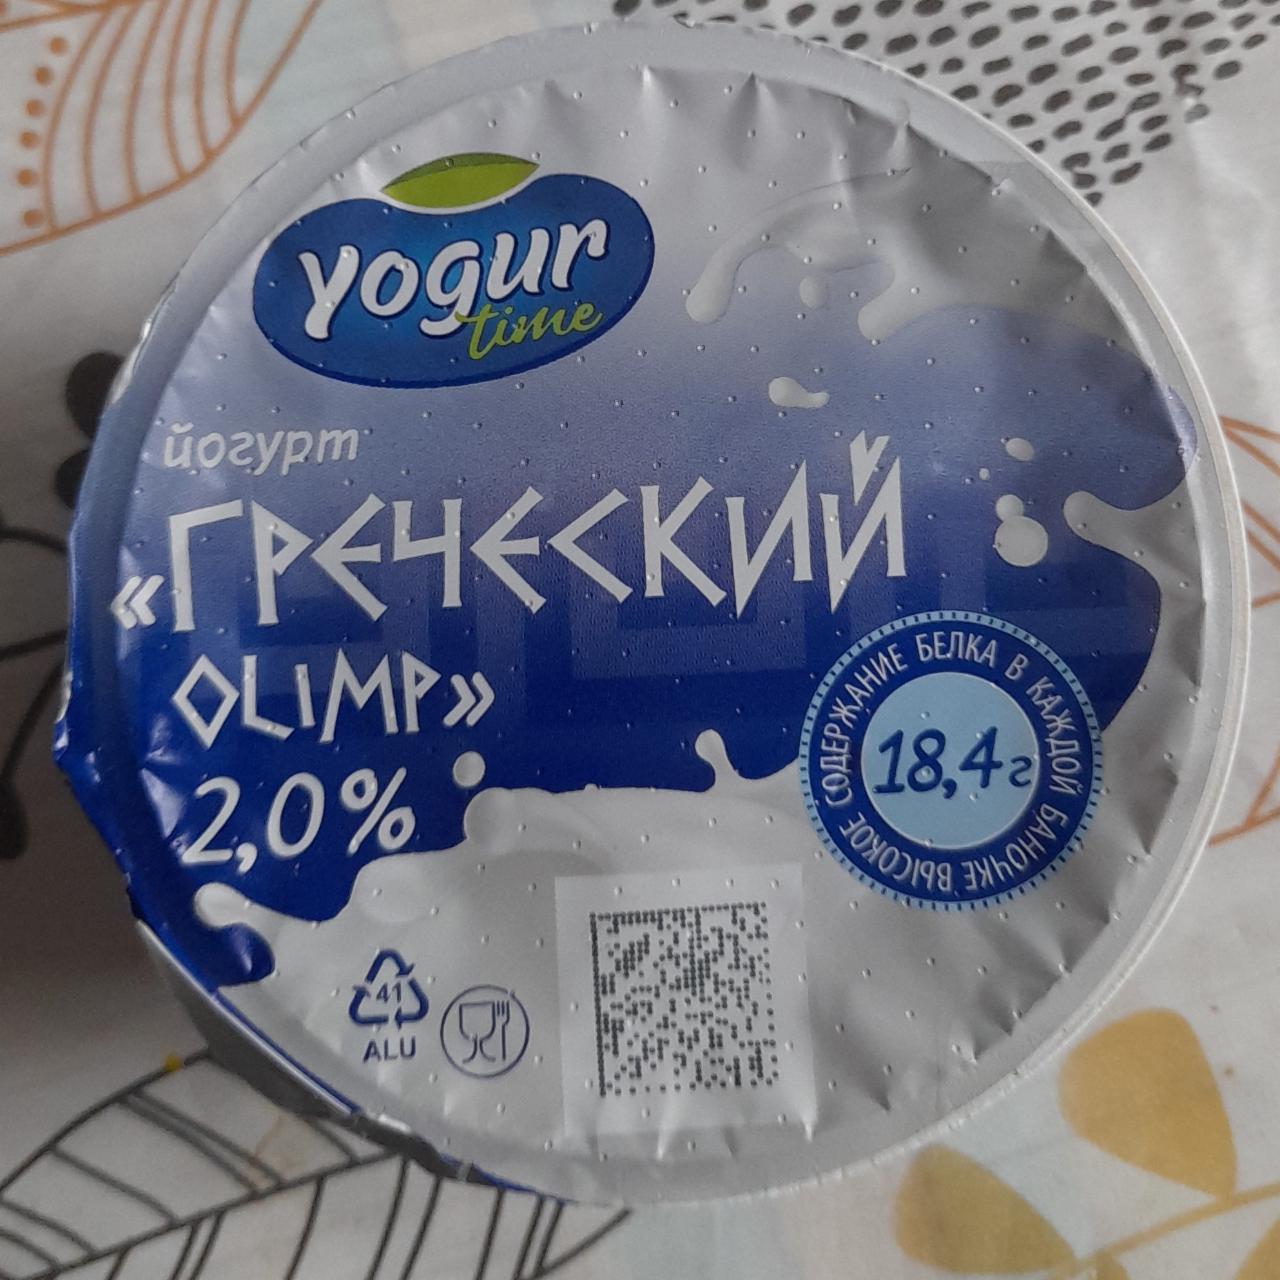 Фото - Йогурт греческий 2% Олимп Yогурт